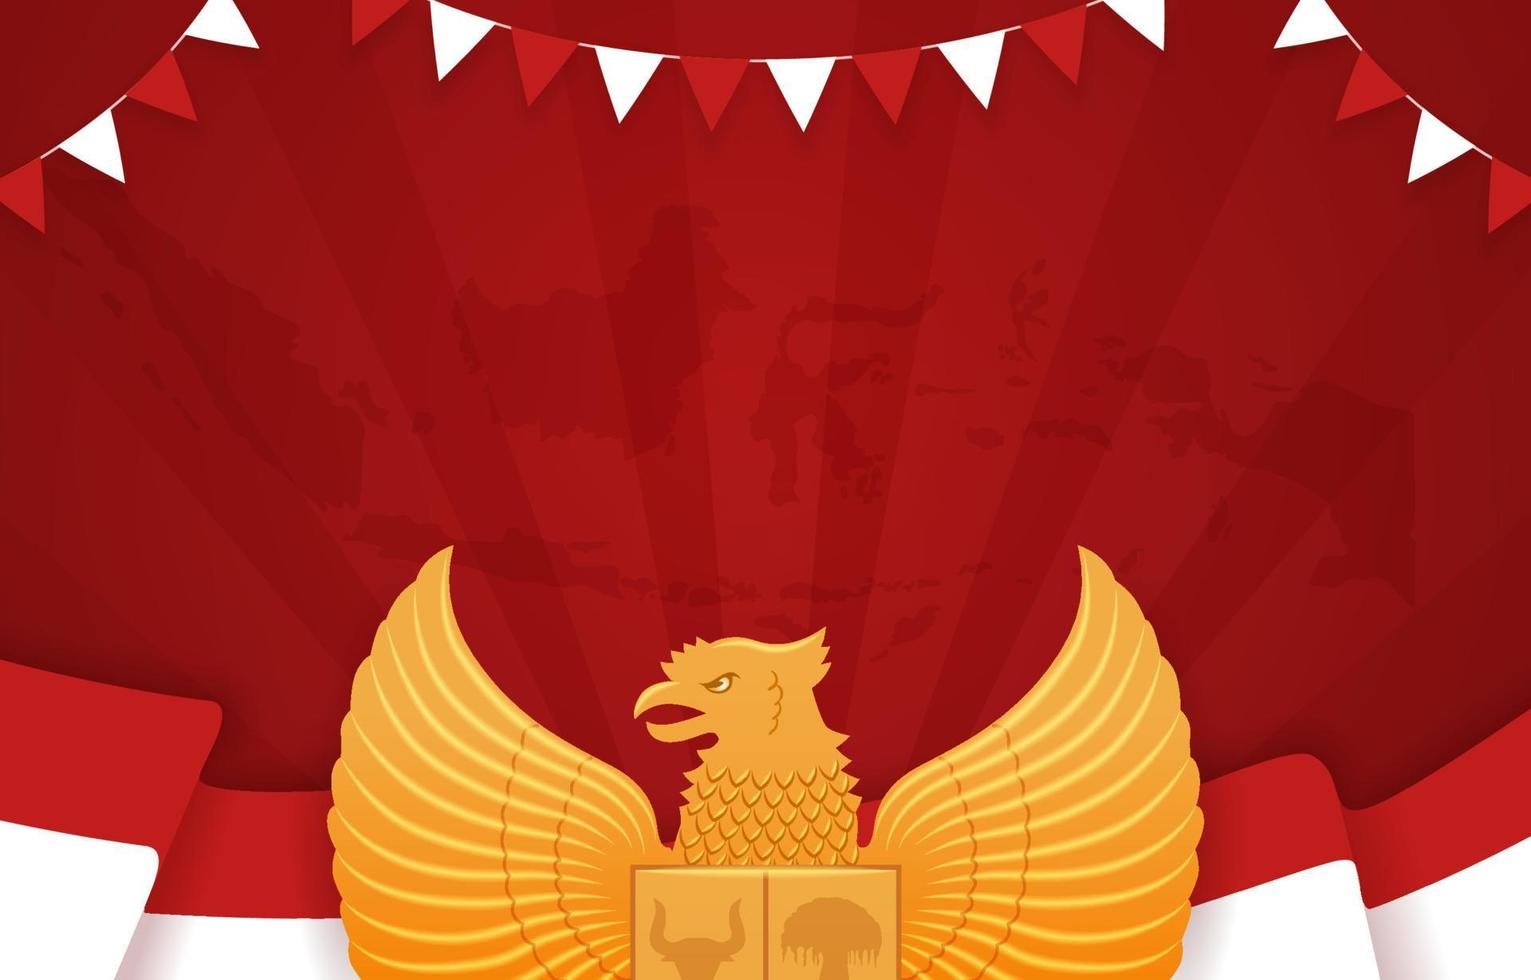 Hari Pancasila Background with Garuda and Indonesian Flag vector